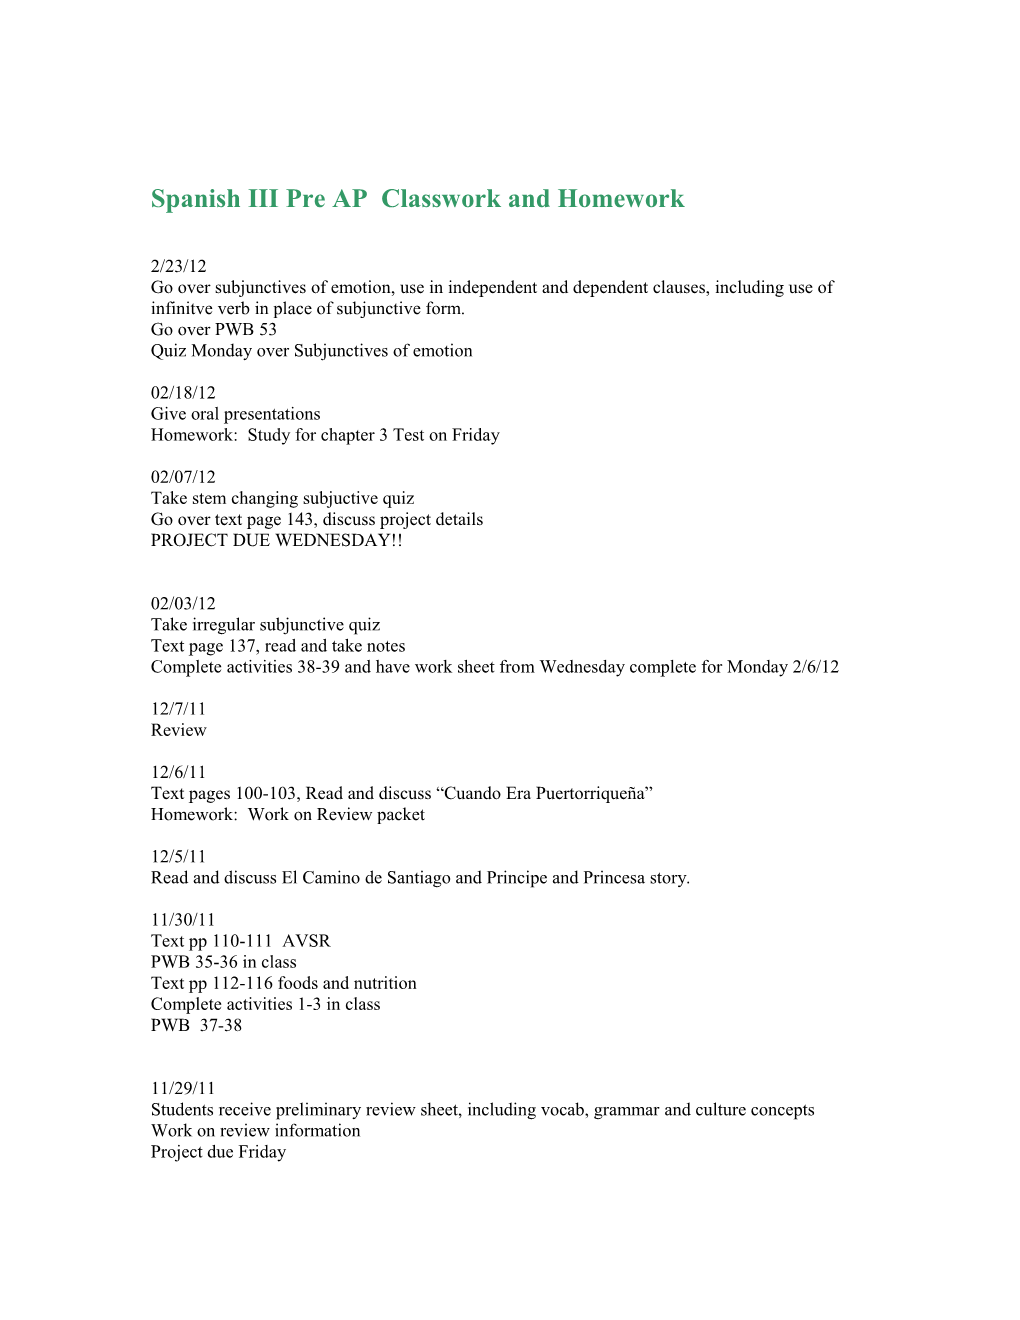 Spanish III Pre AP Classwork And Homework